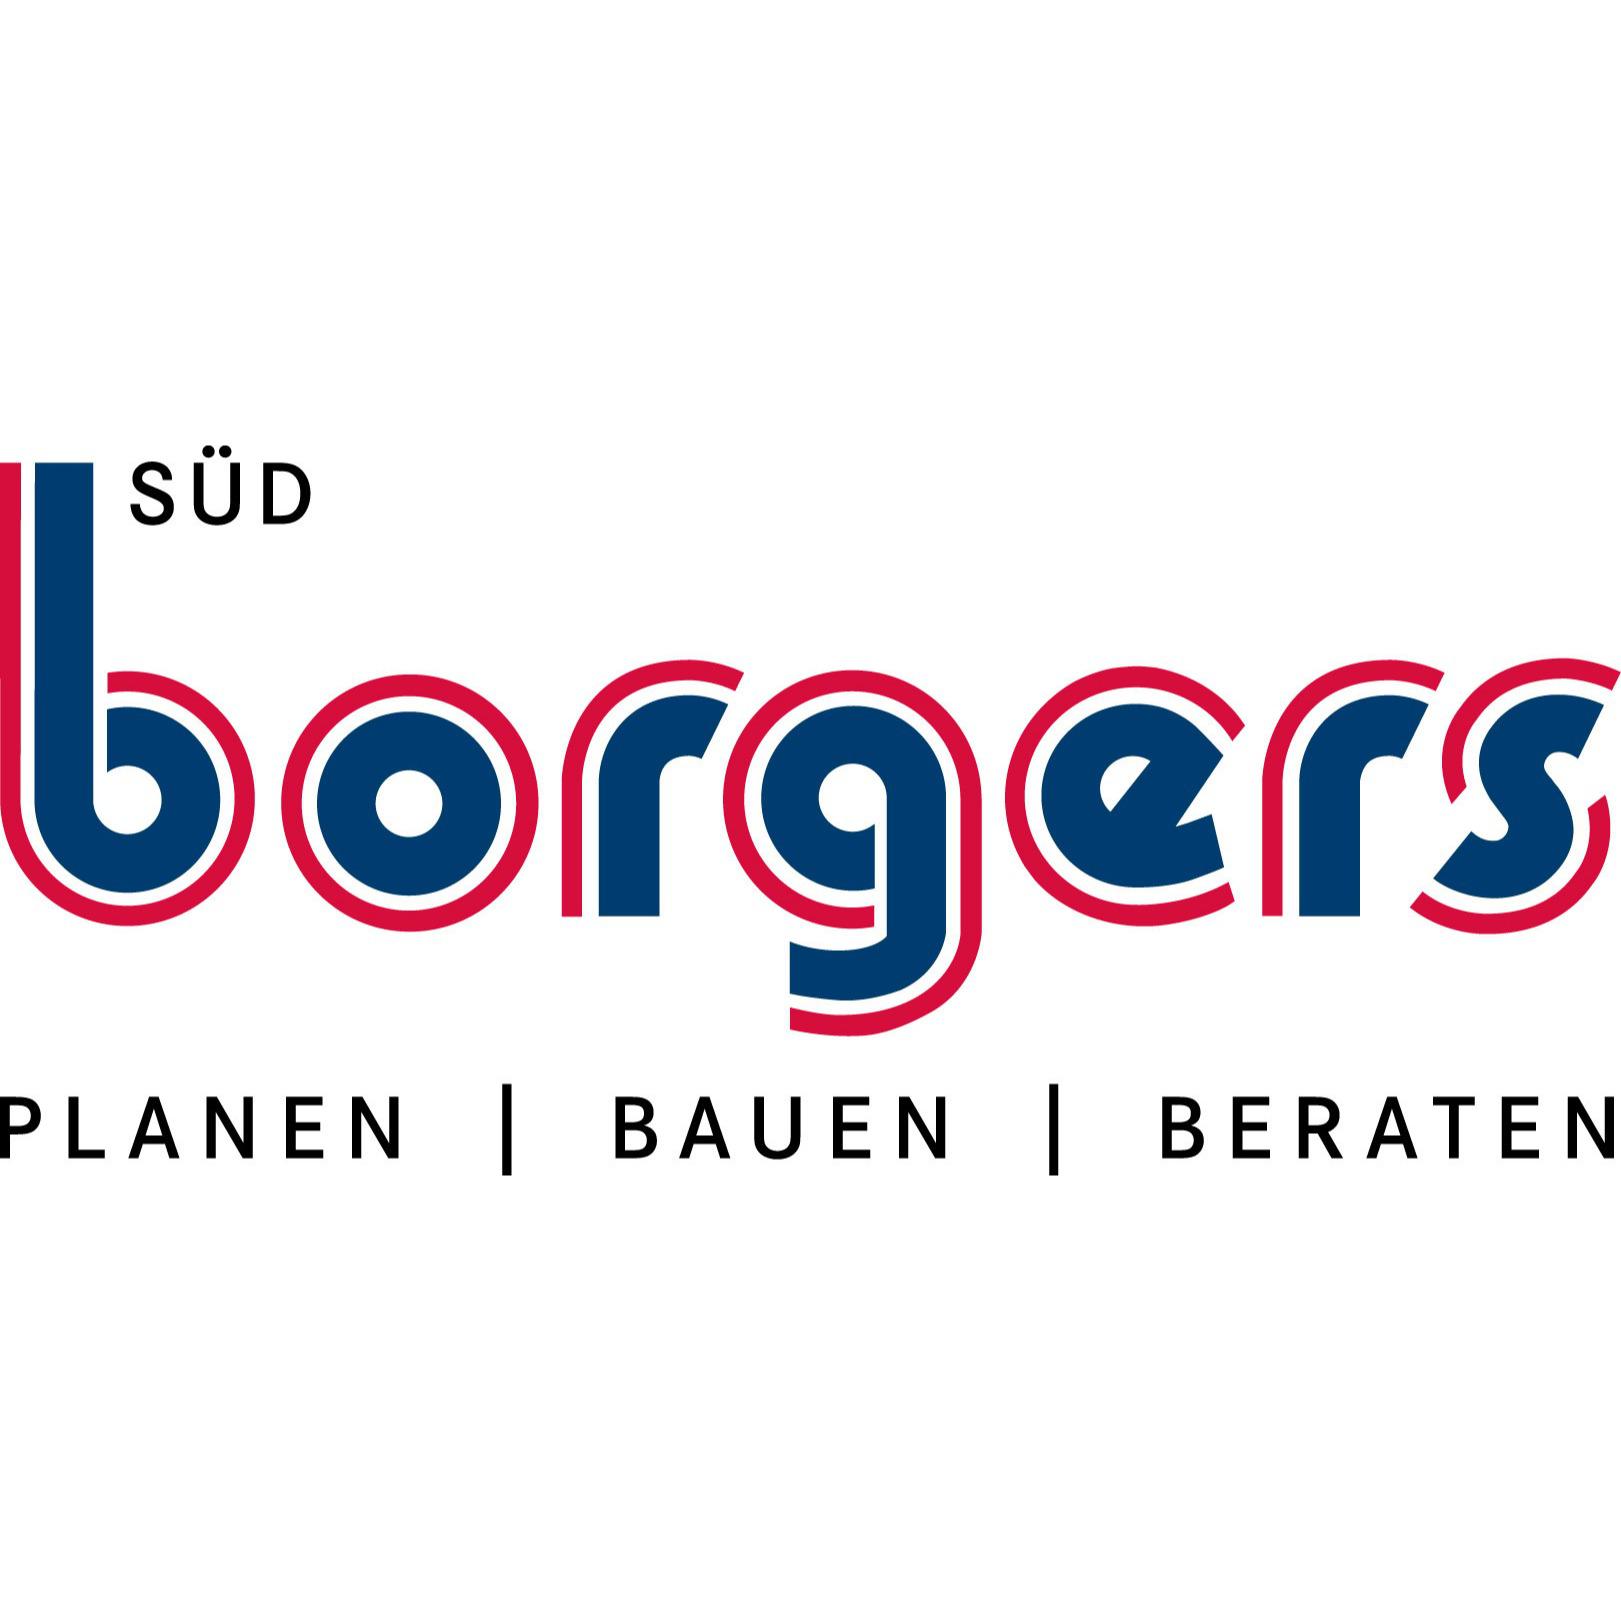 Borgers Süd GmbH in Rödermark - Logo